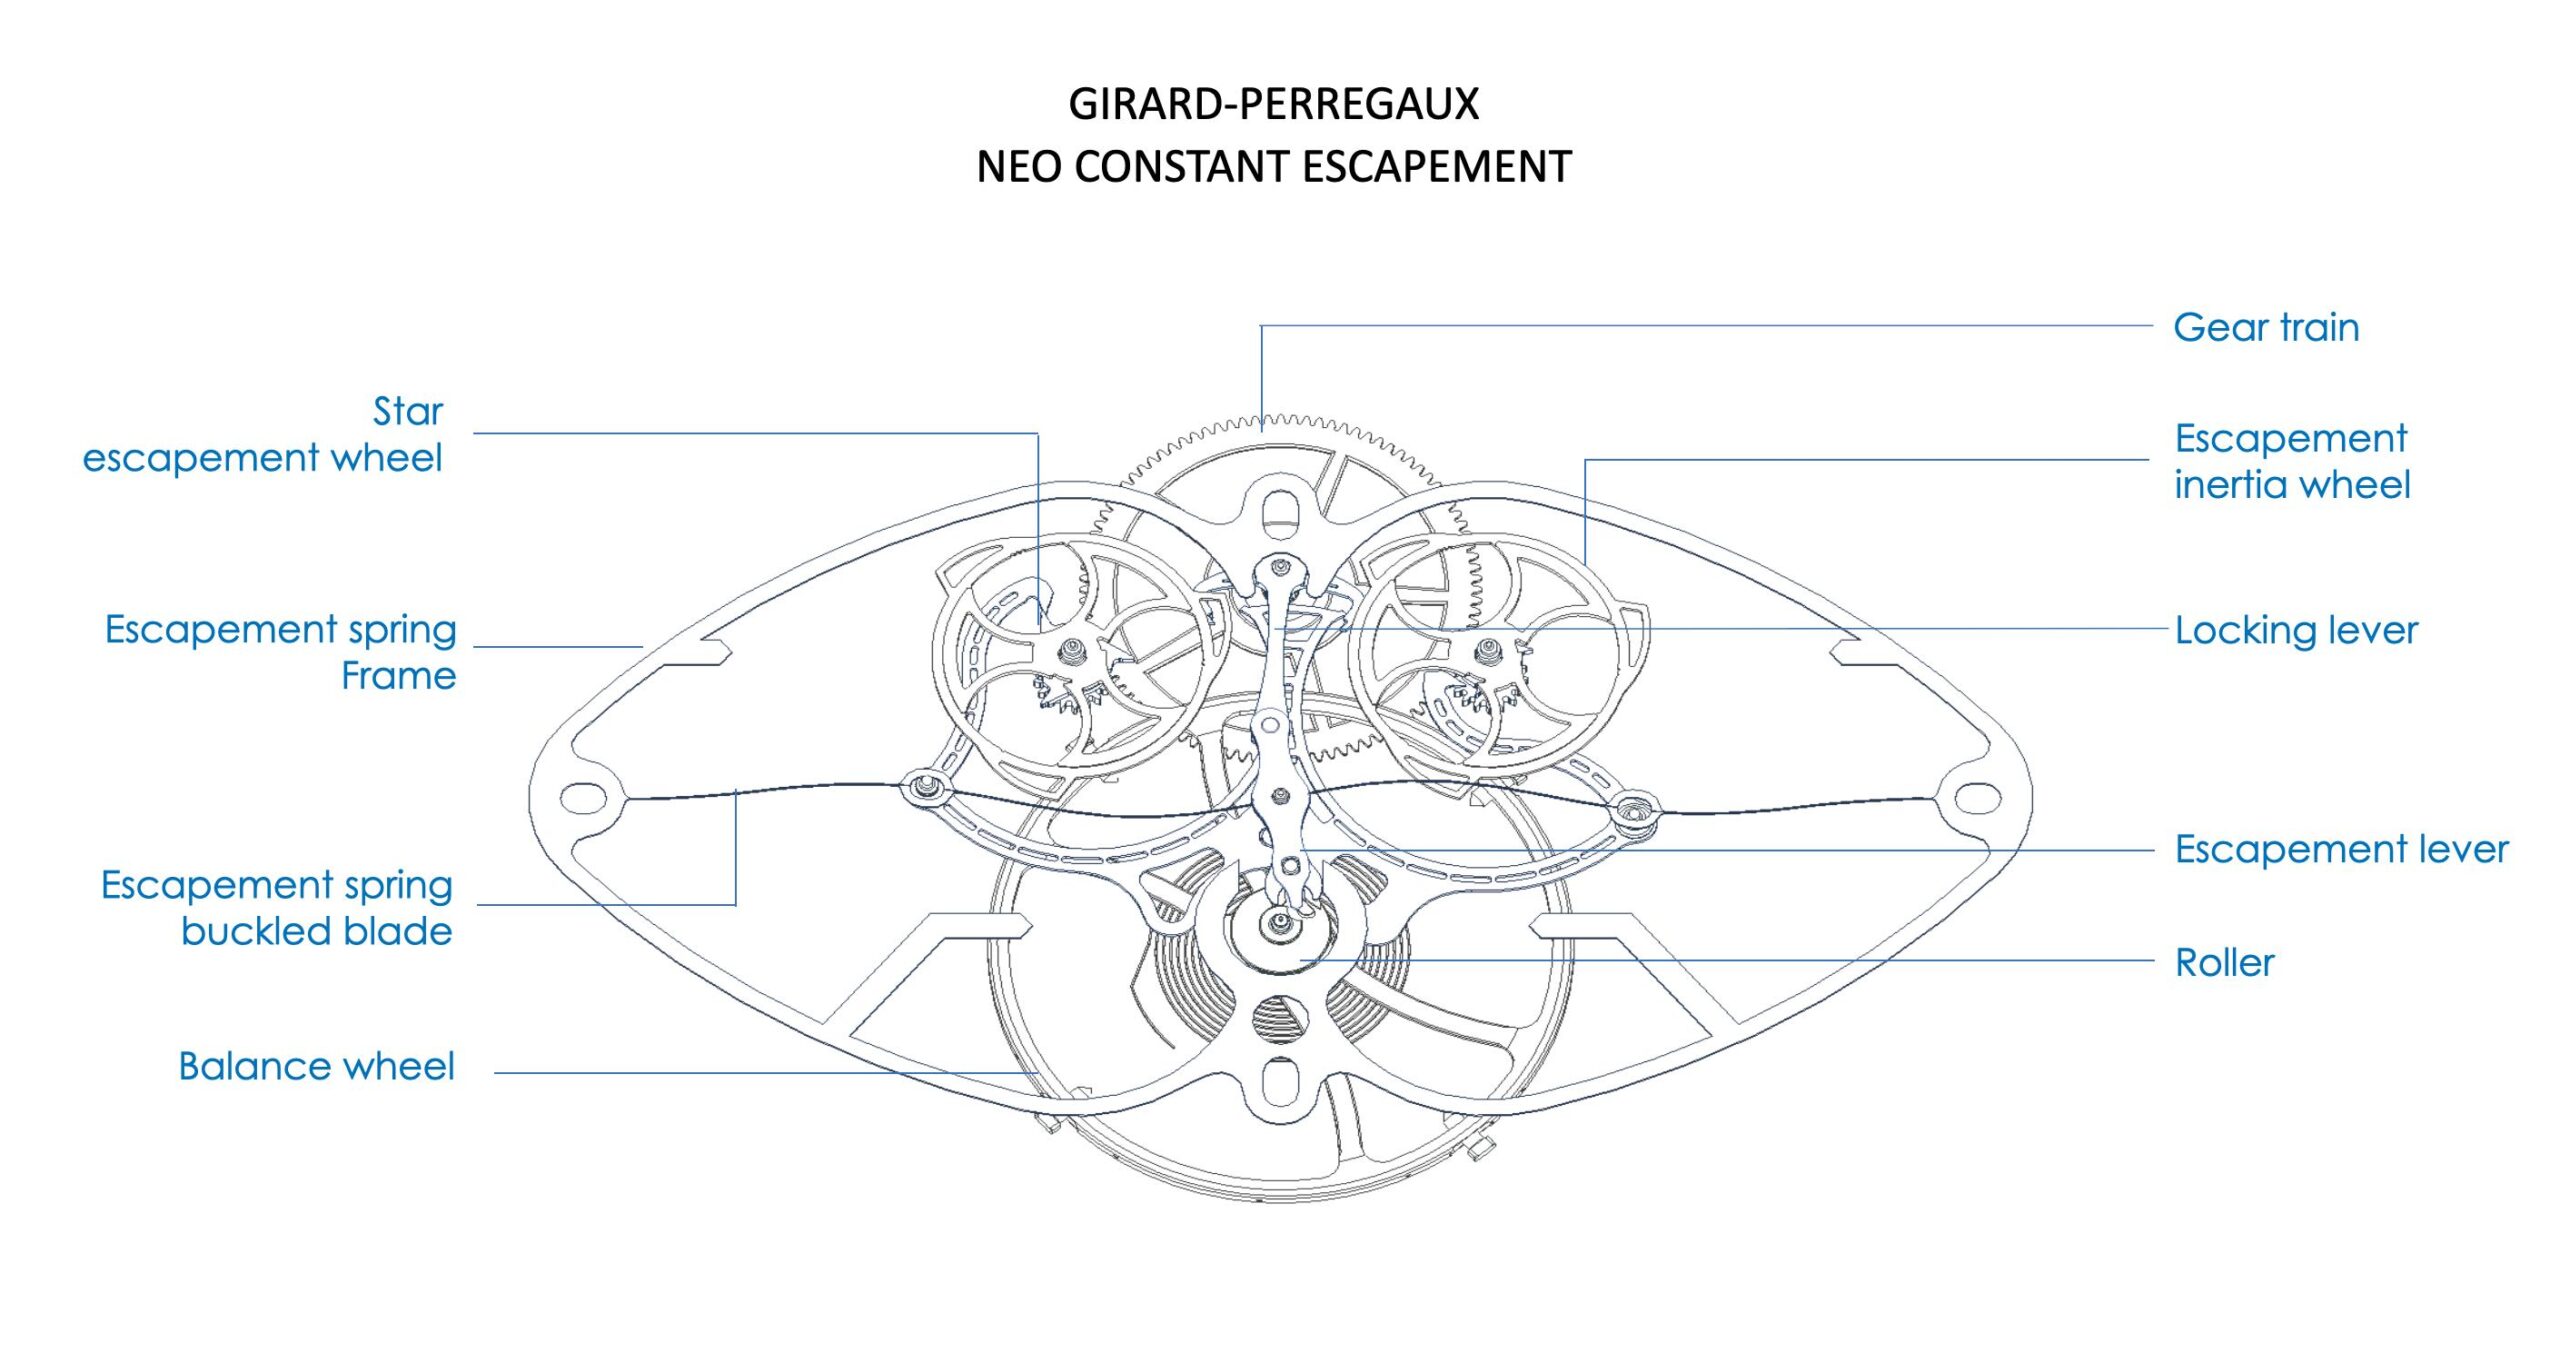 Girard perregaux Neo Constant Escapement technical scheme